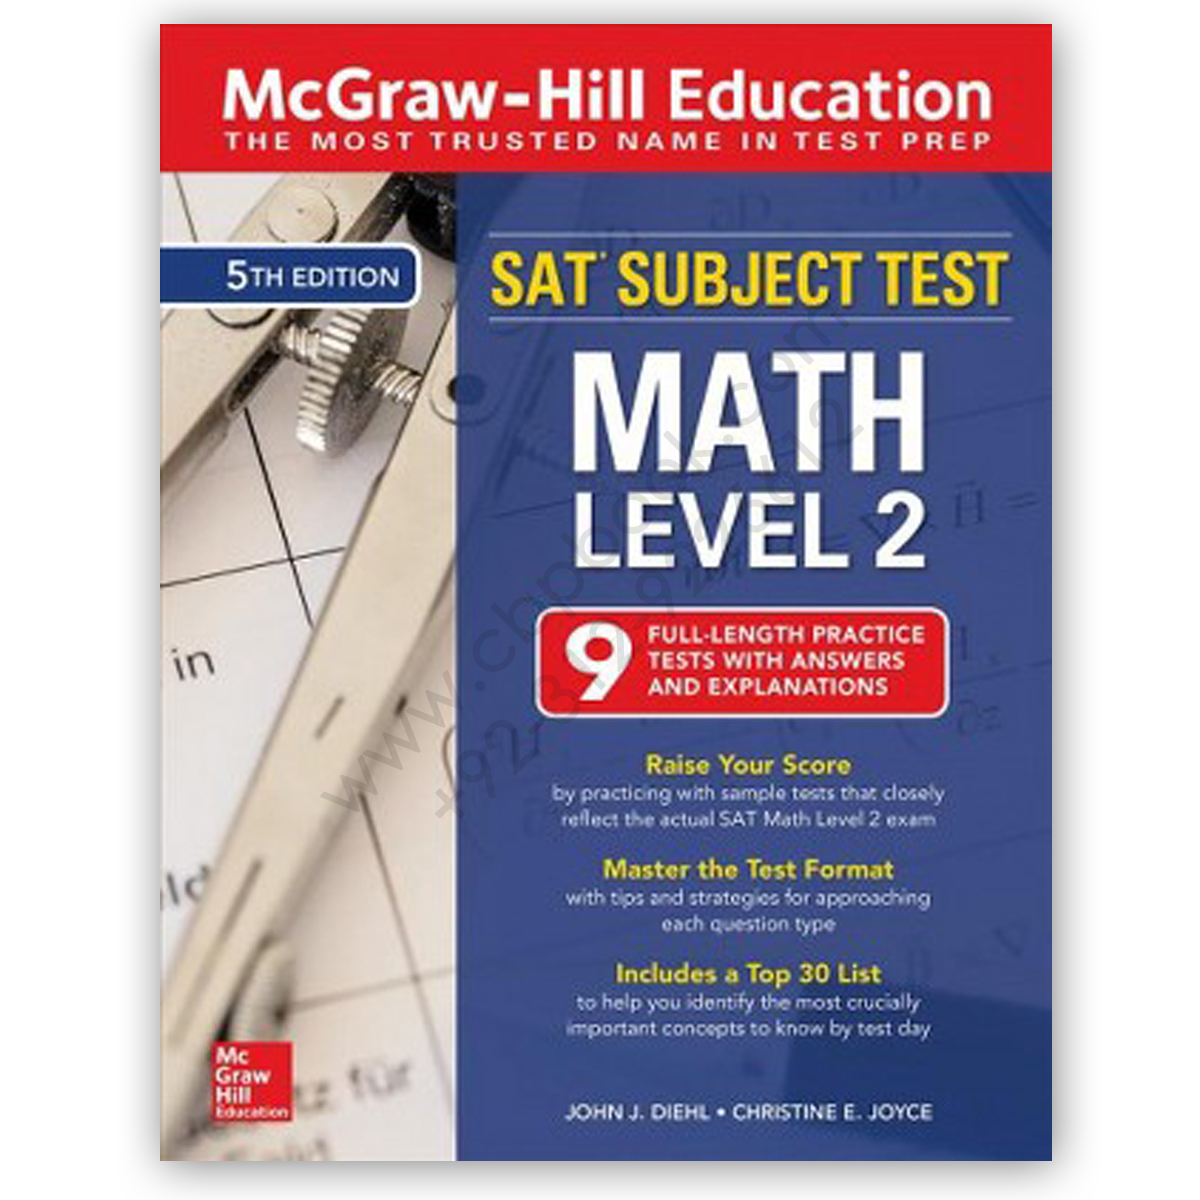 Test　Mungal　SAT　Level　5th　Bazar　Edition　Subject　Hill　–　MATH　McGraw